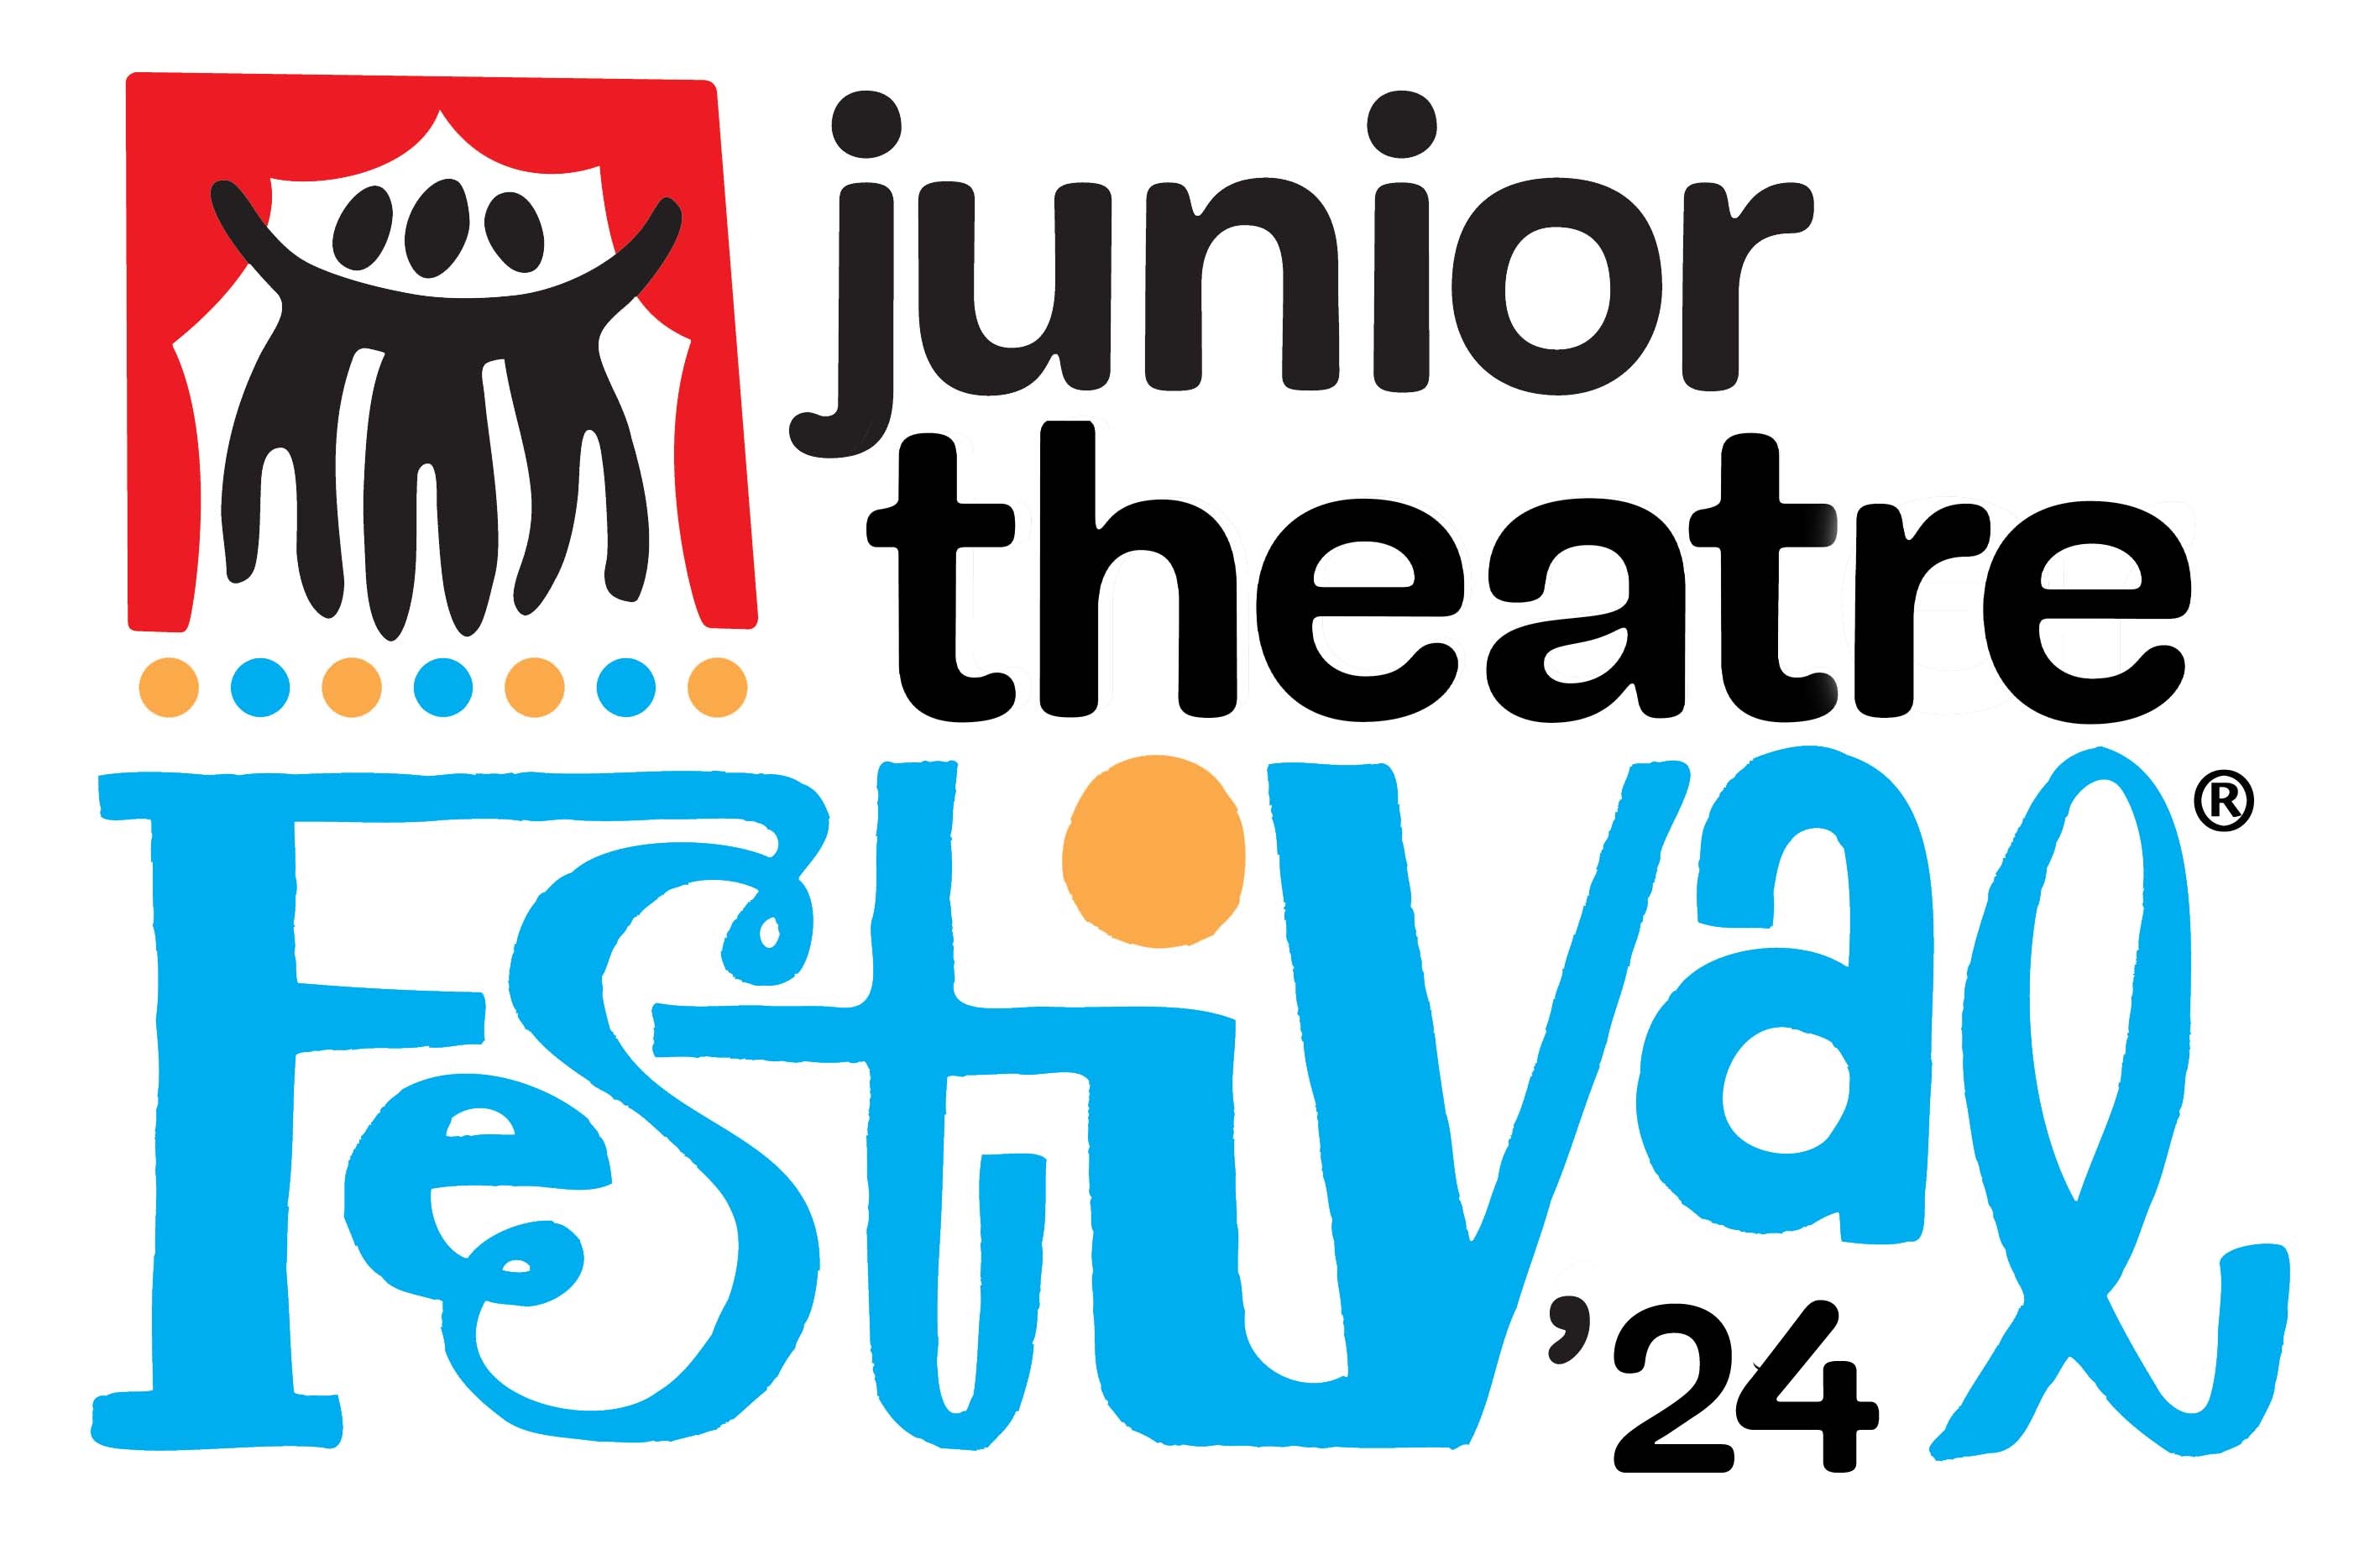 Junior Theatre Festival MTI Europe